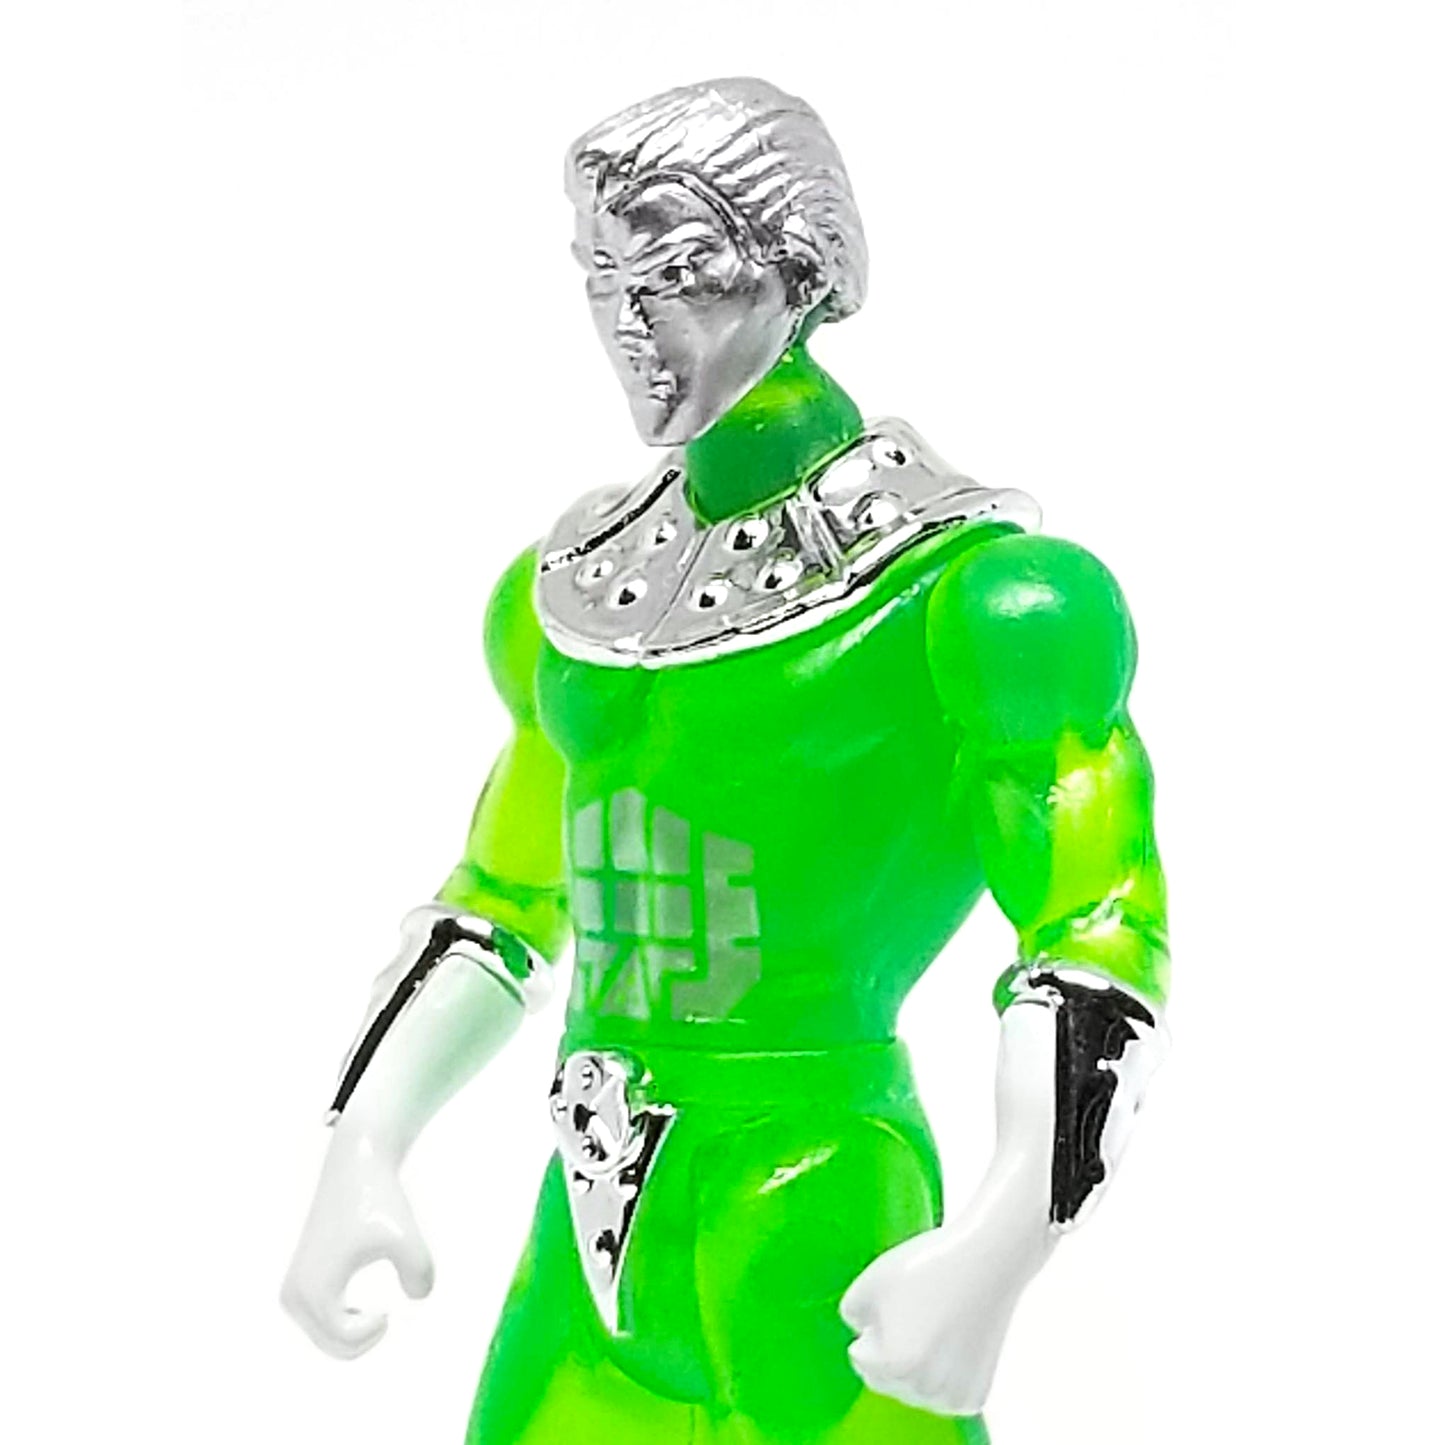 Traveler Armor: Silver Chrome (figure not included)